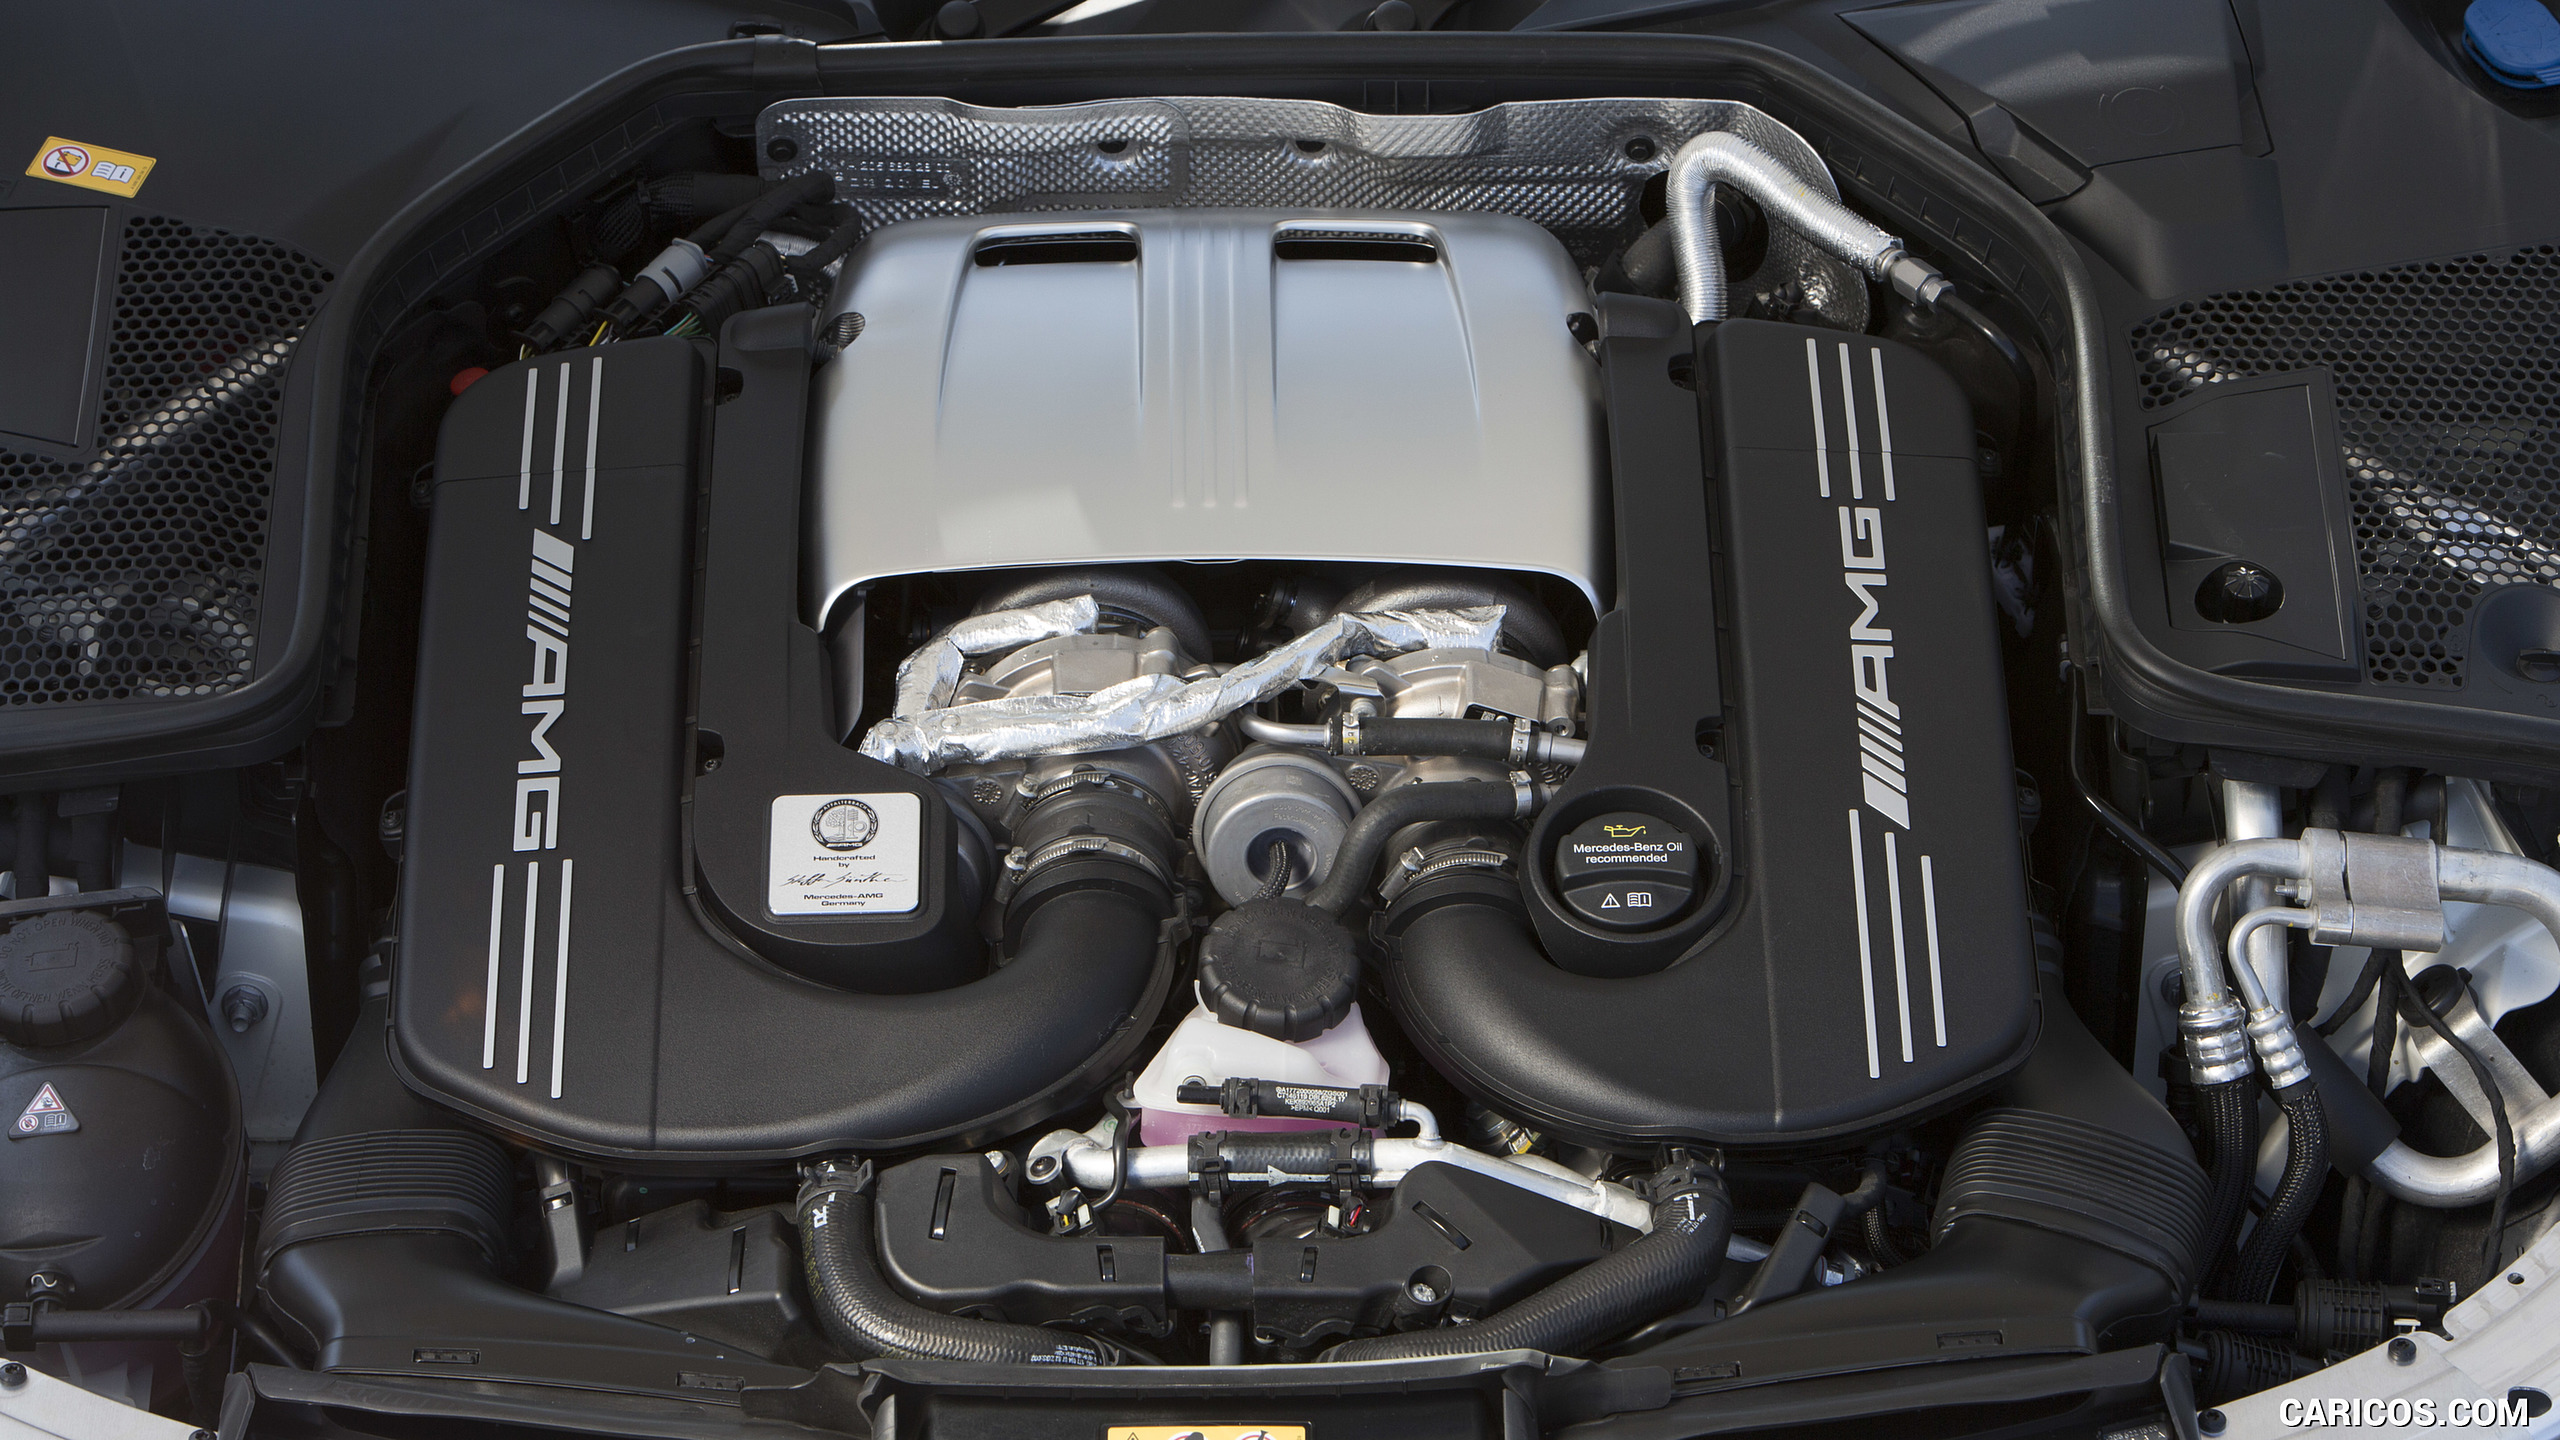 2017 Mercedes-AMG C63 S Cabriolet - Engine, #142 of 222